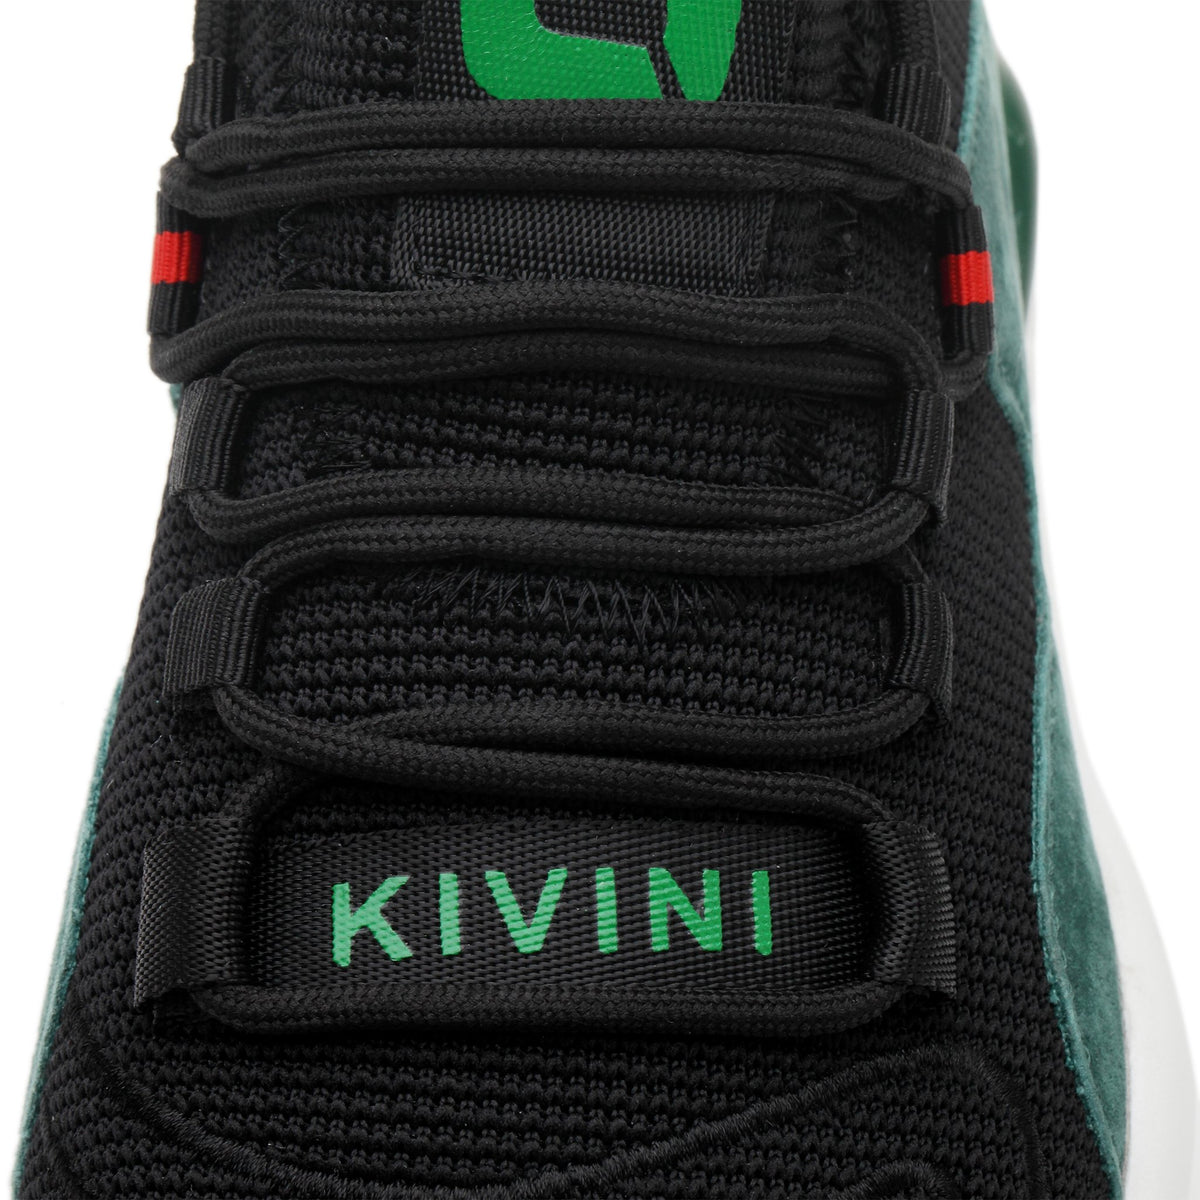 Kivini Indestructible Shoes - Indestructible Shoes